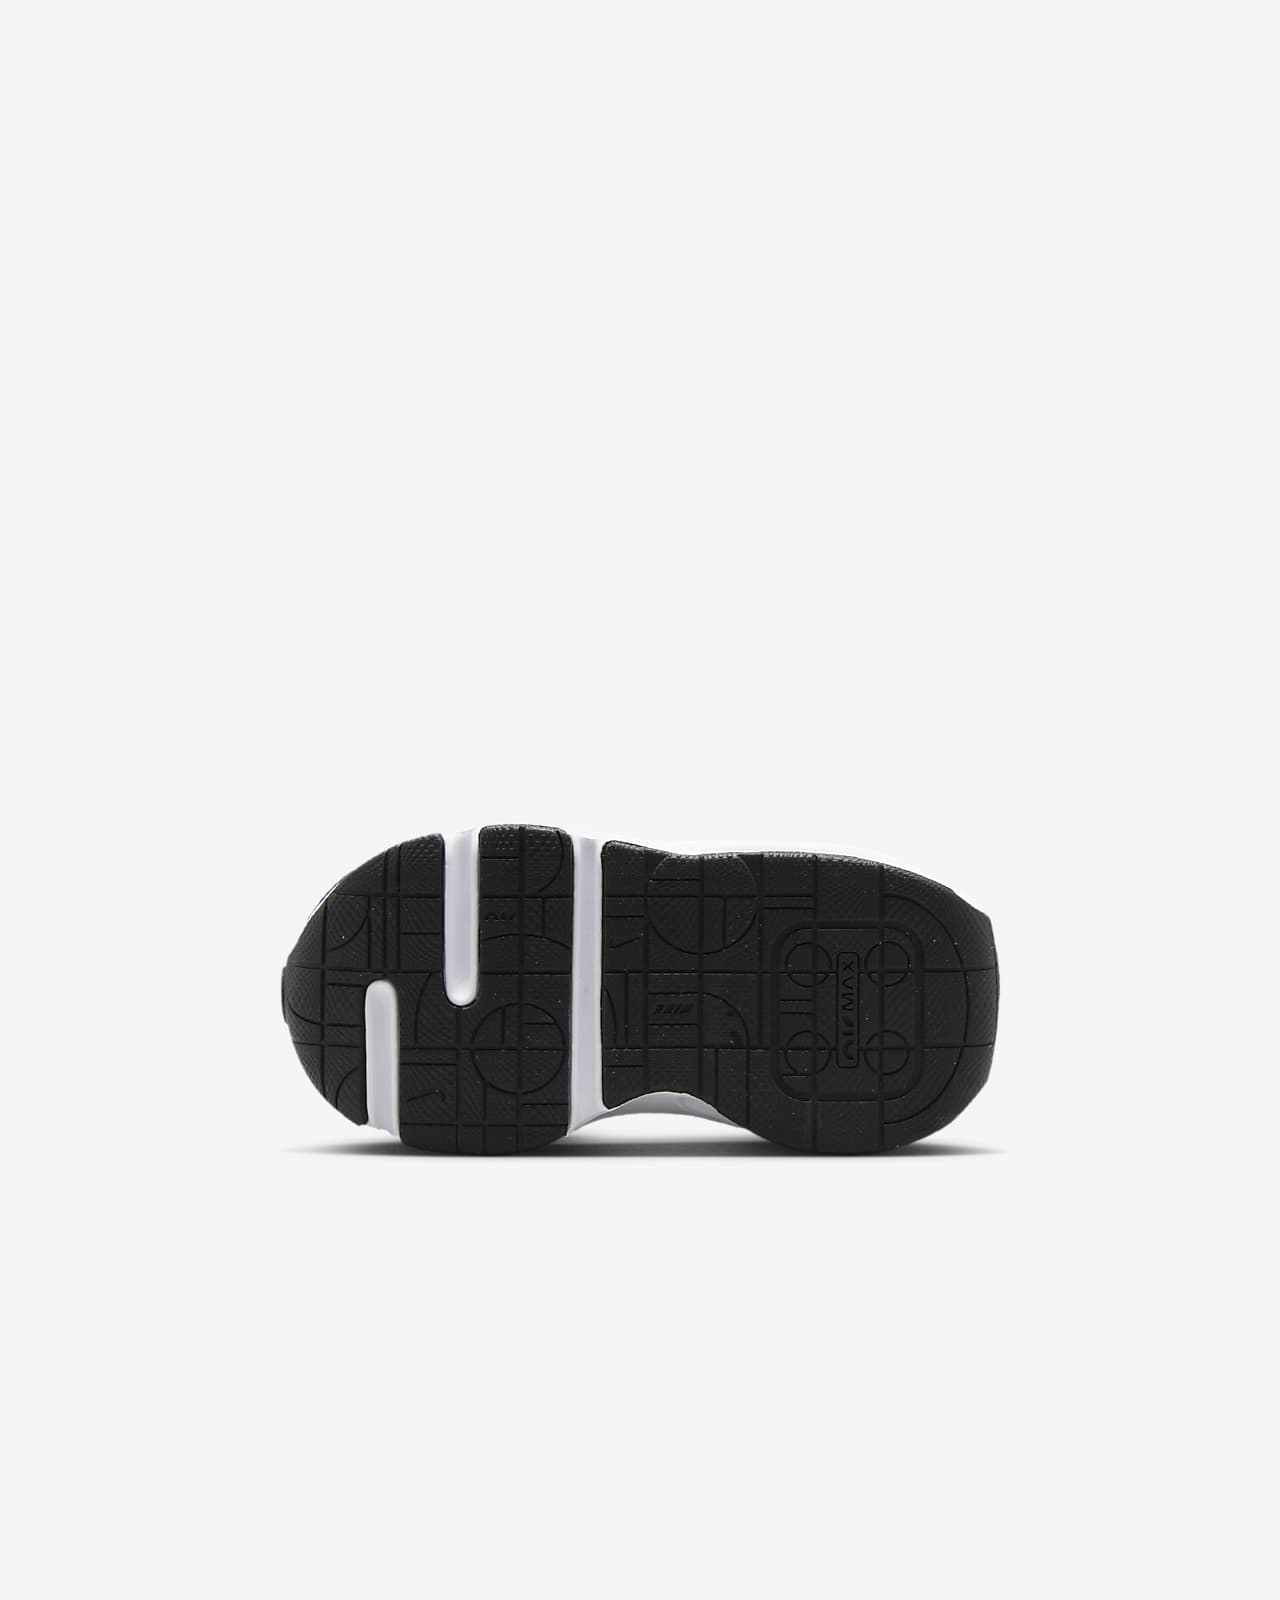 Nike INTRLK Lite Shoes. Max Baby/Toddler Air